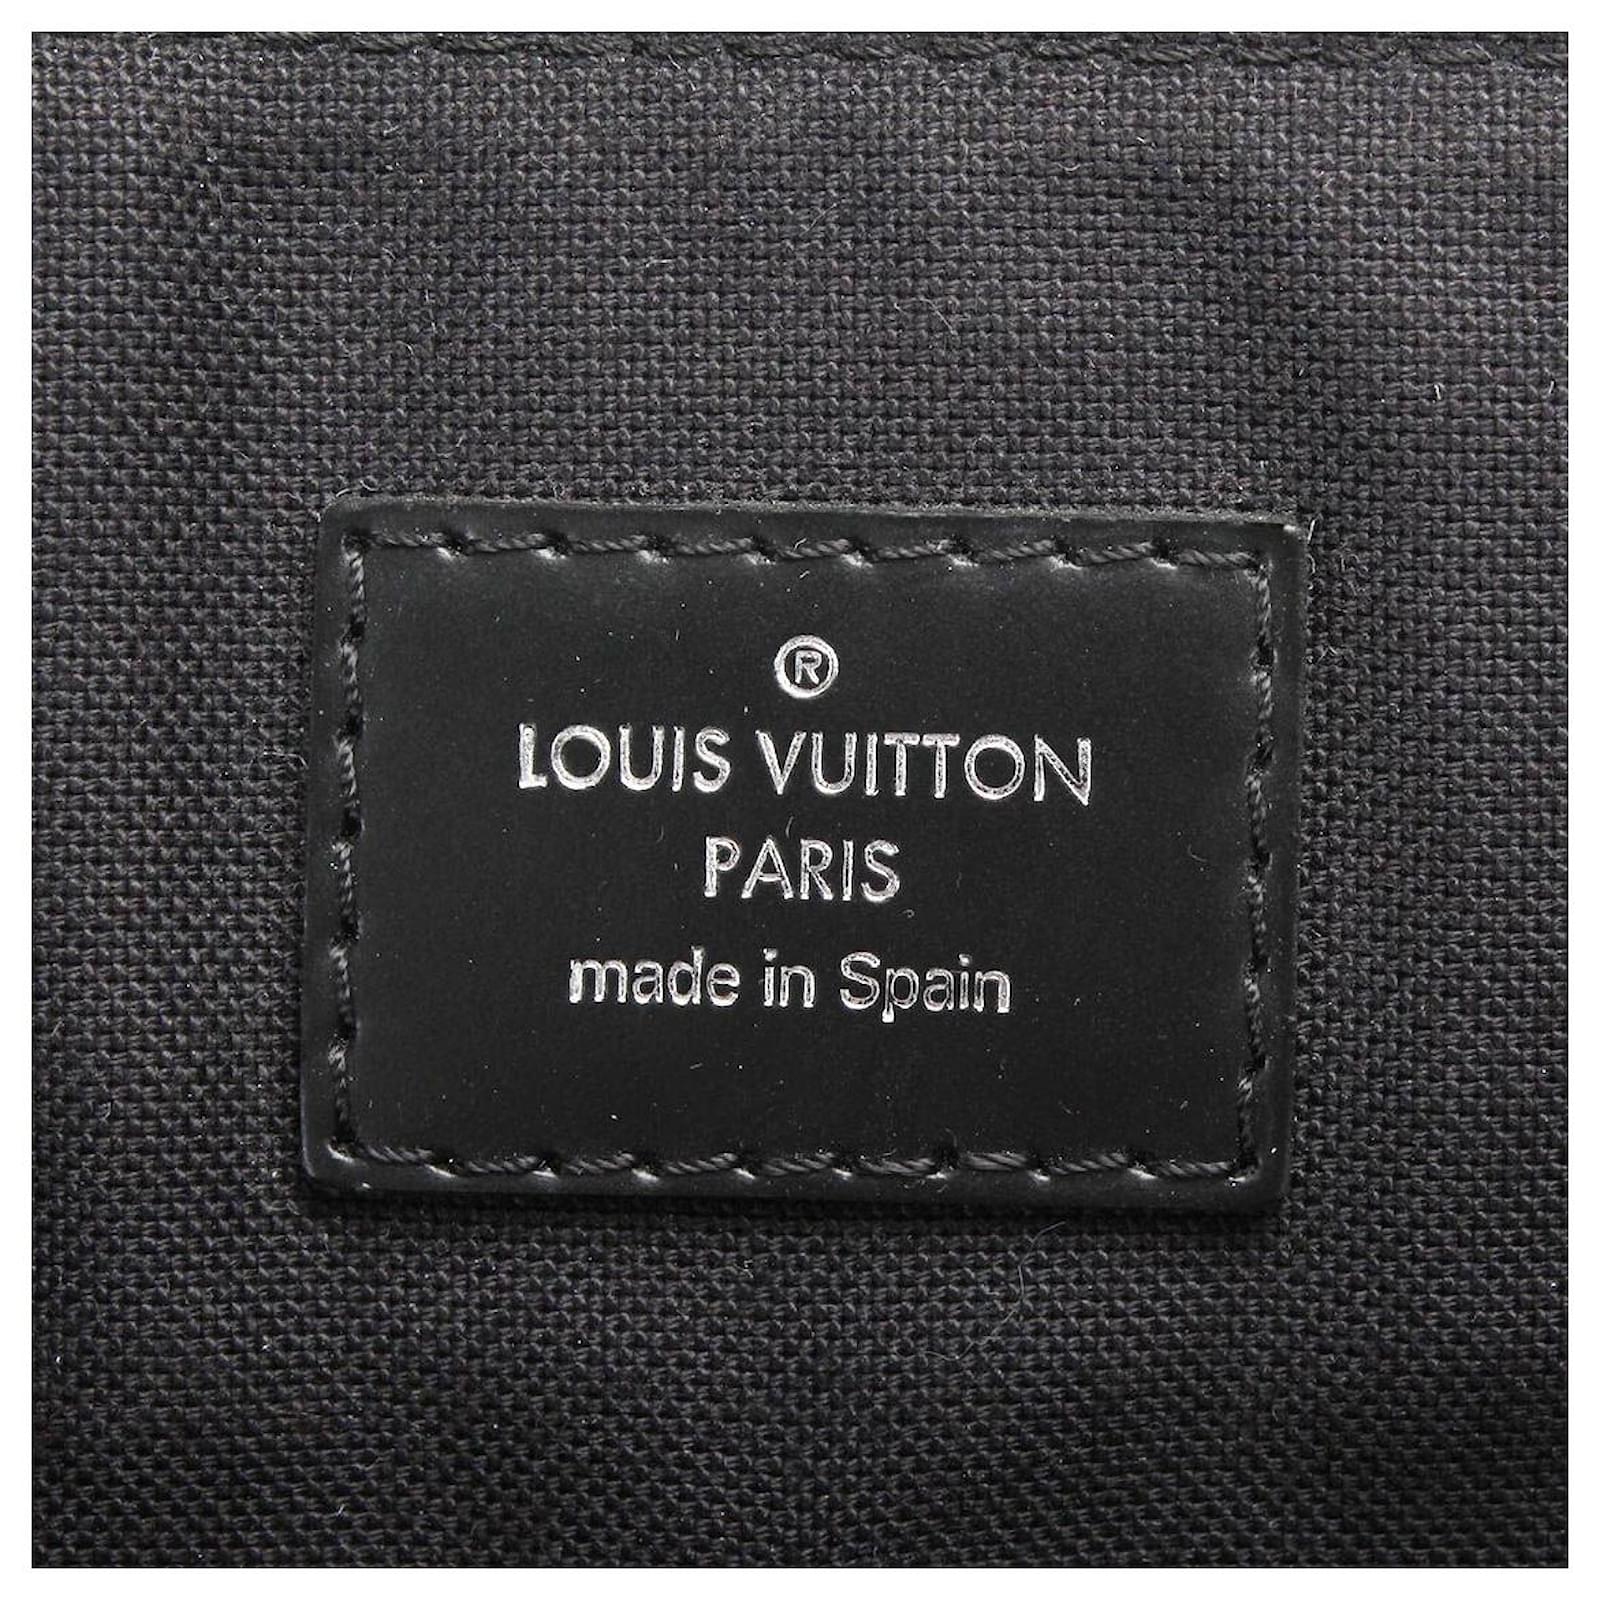 Bandolera Louis Vuitton negra black LOGO – phamadripshop